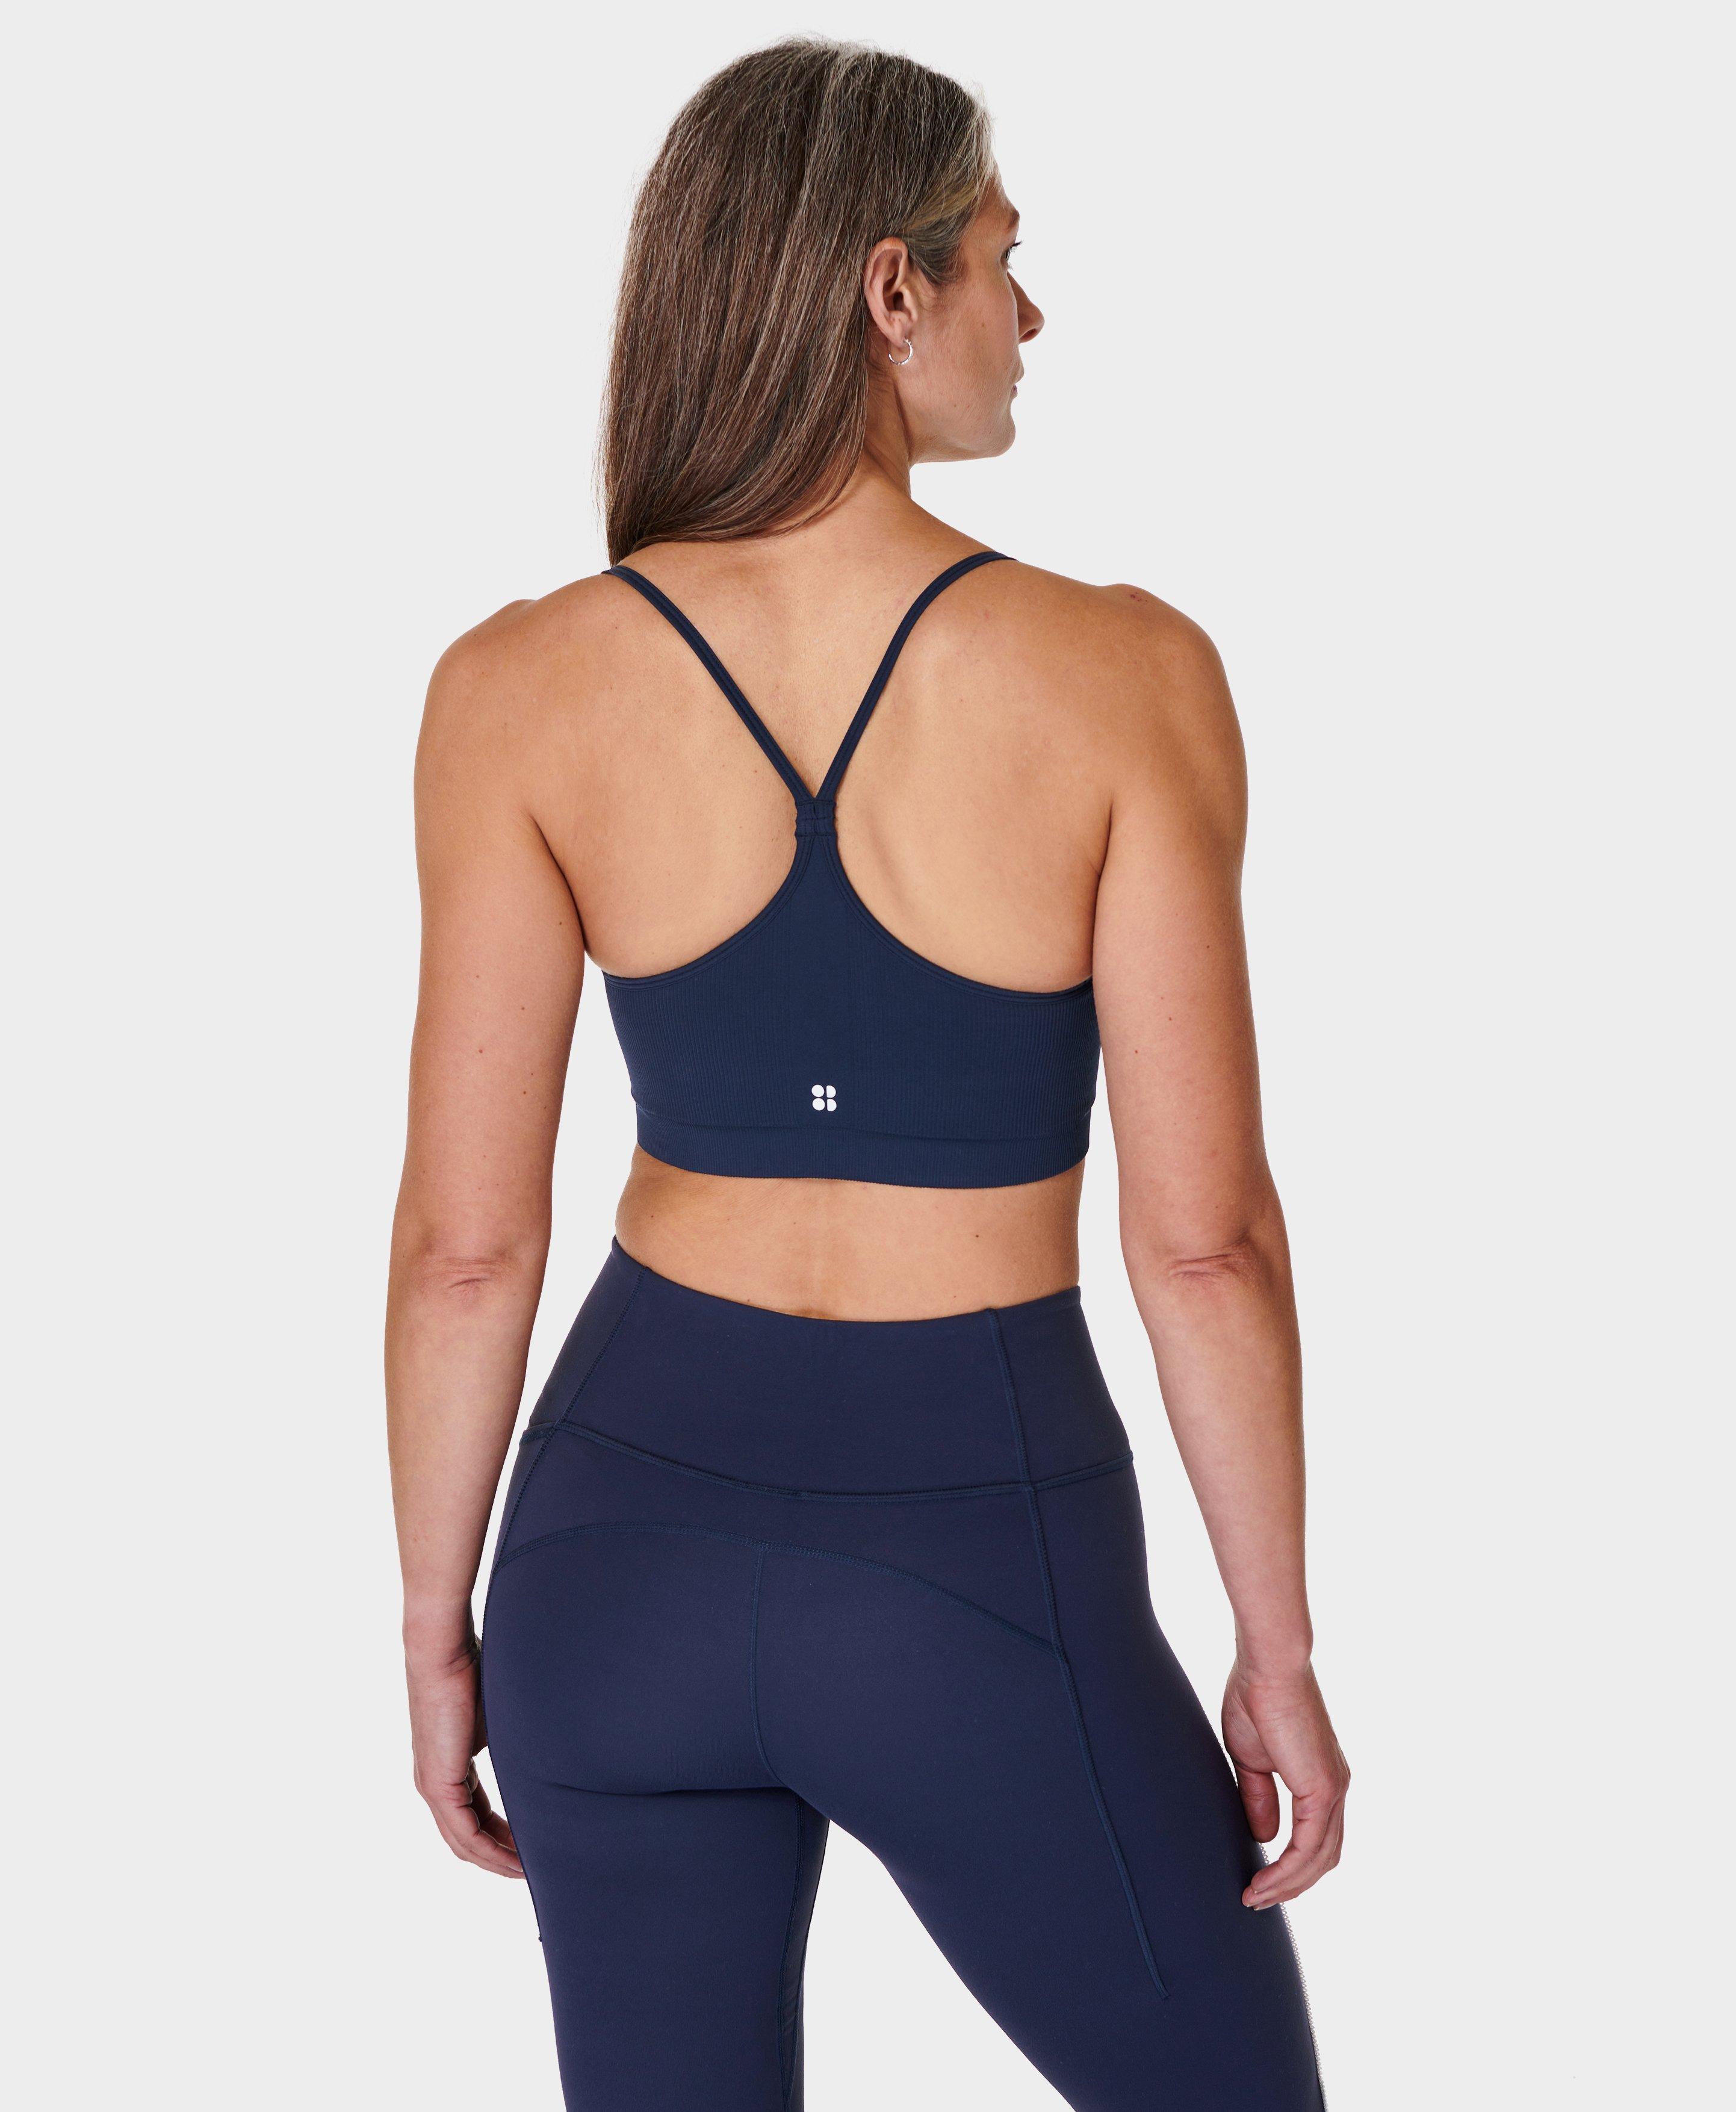 Spirit Restored Yoga Bra - Navy Blue, Women's Sports Bras